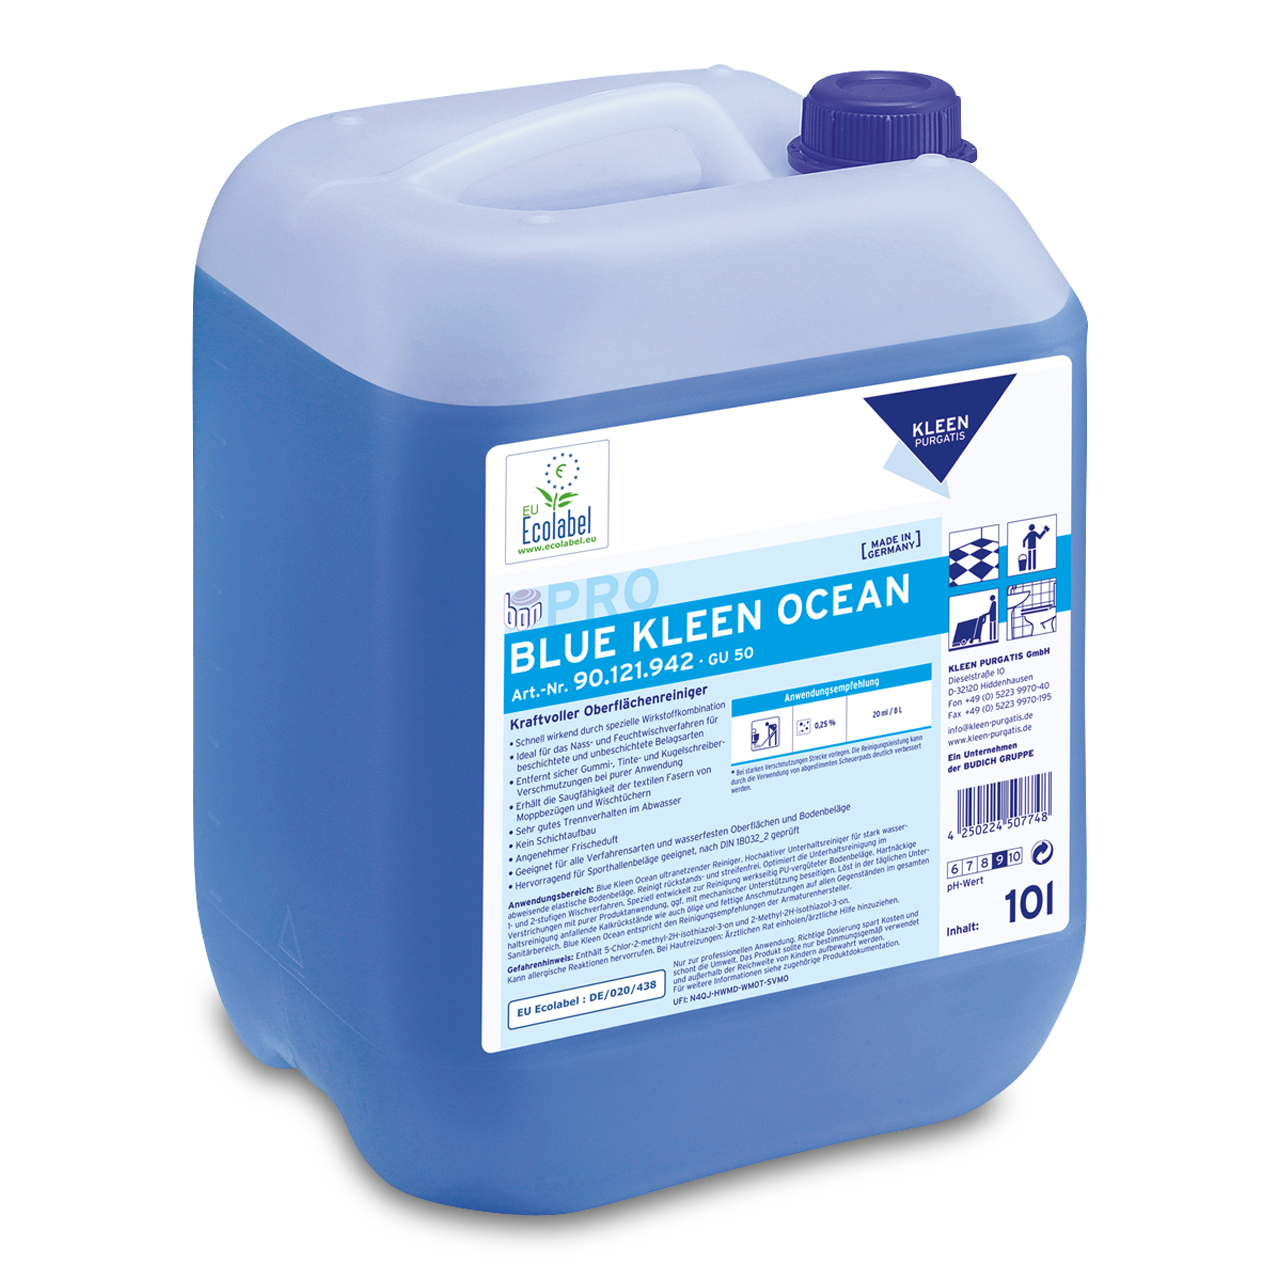 Blue Kleen Ocean, Mehrzweckreiniger, 10 l Kanister